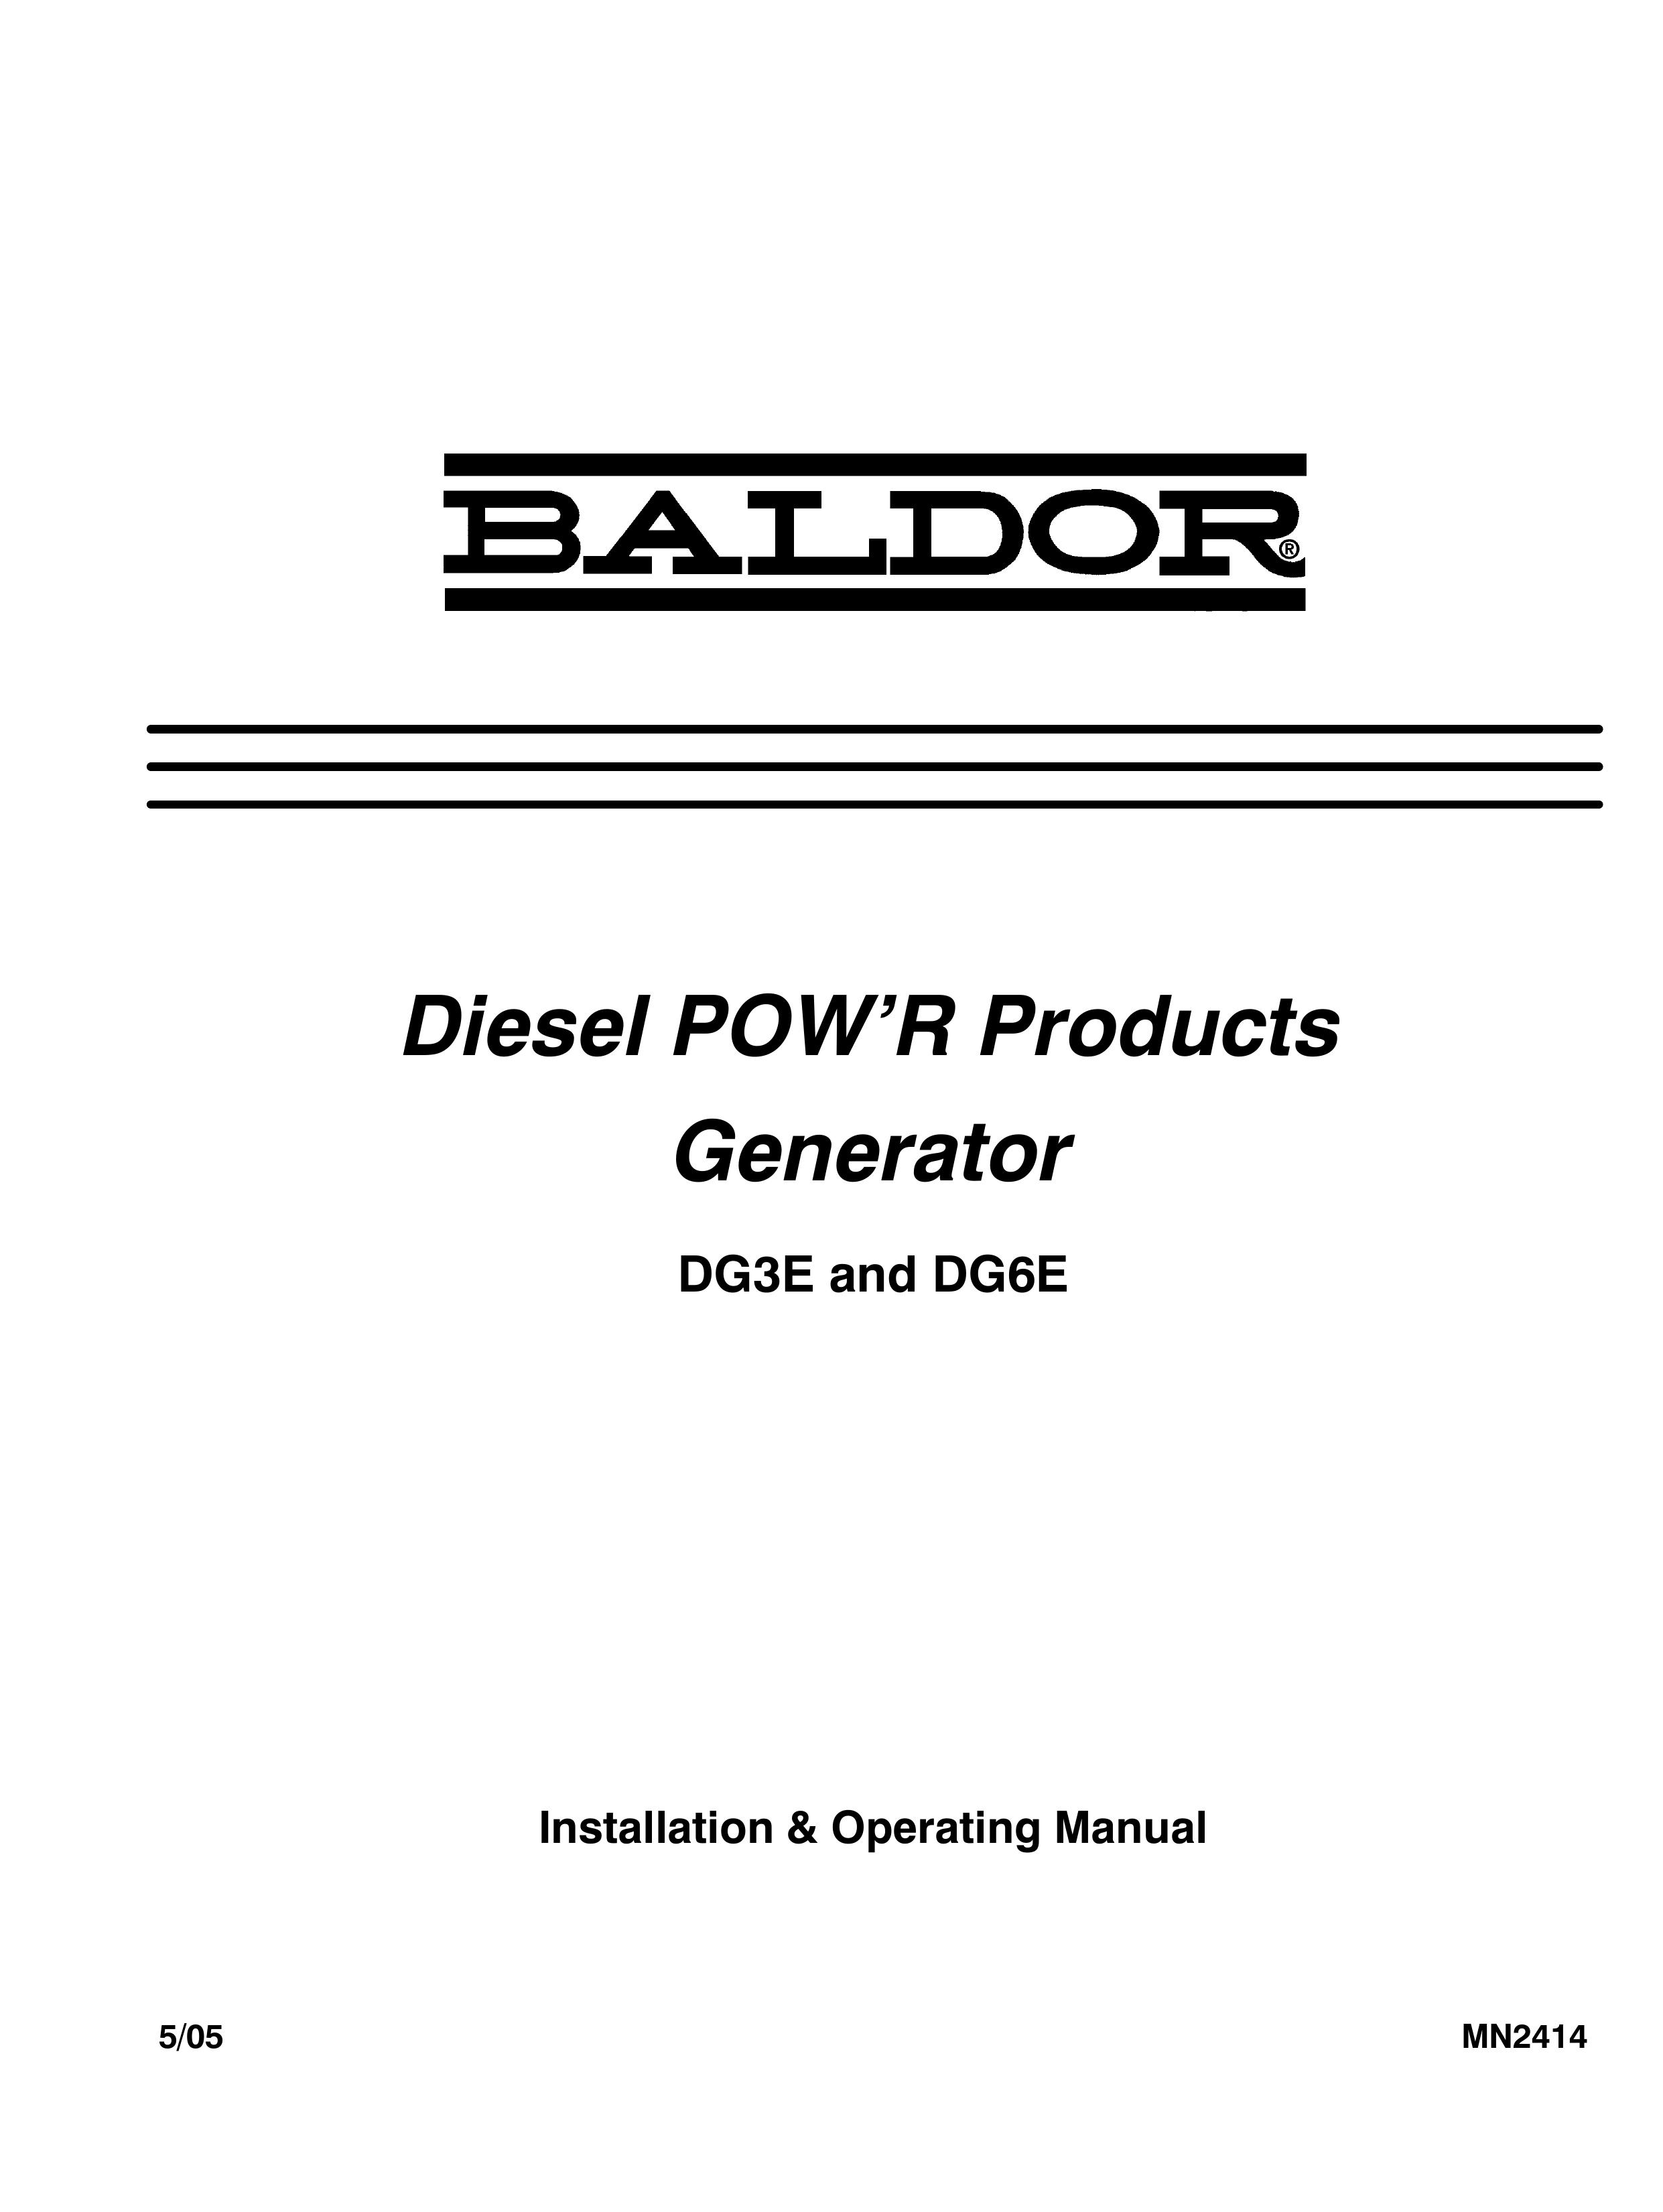 Baldor DG6E Portable Generator User Manual